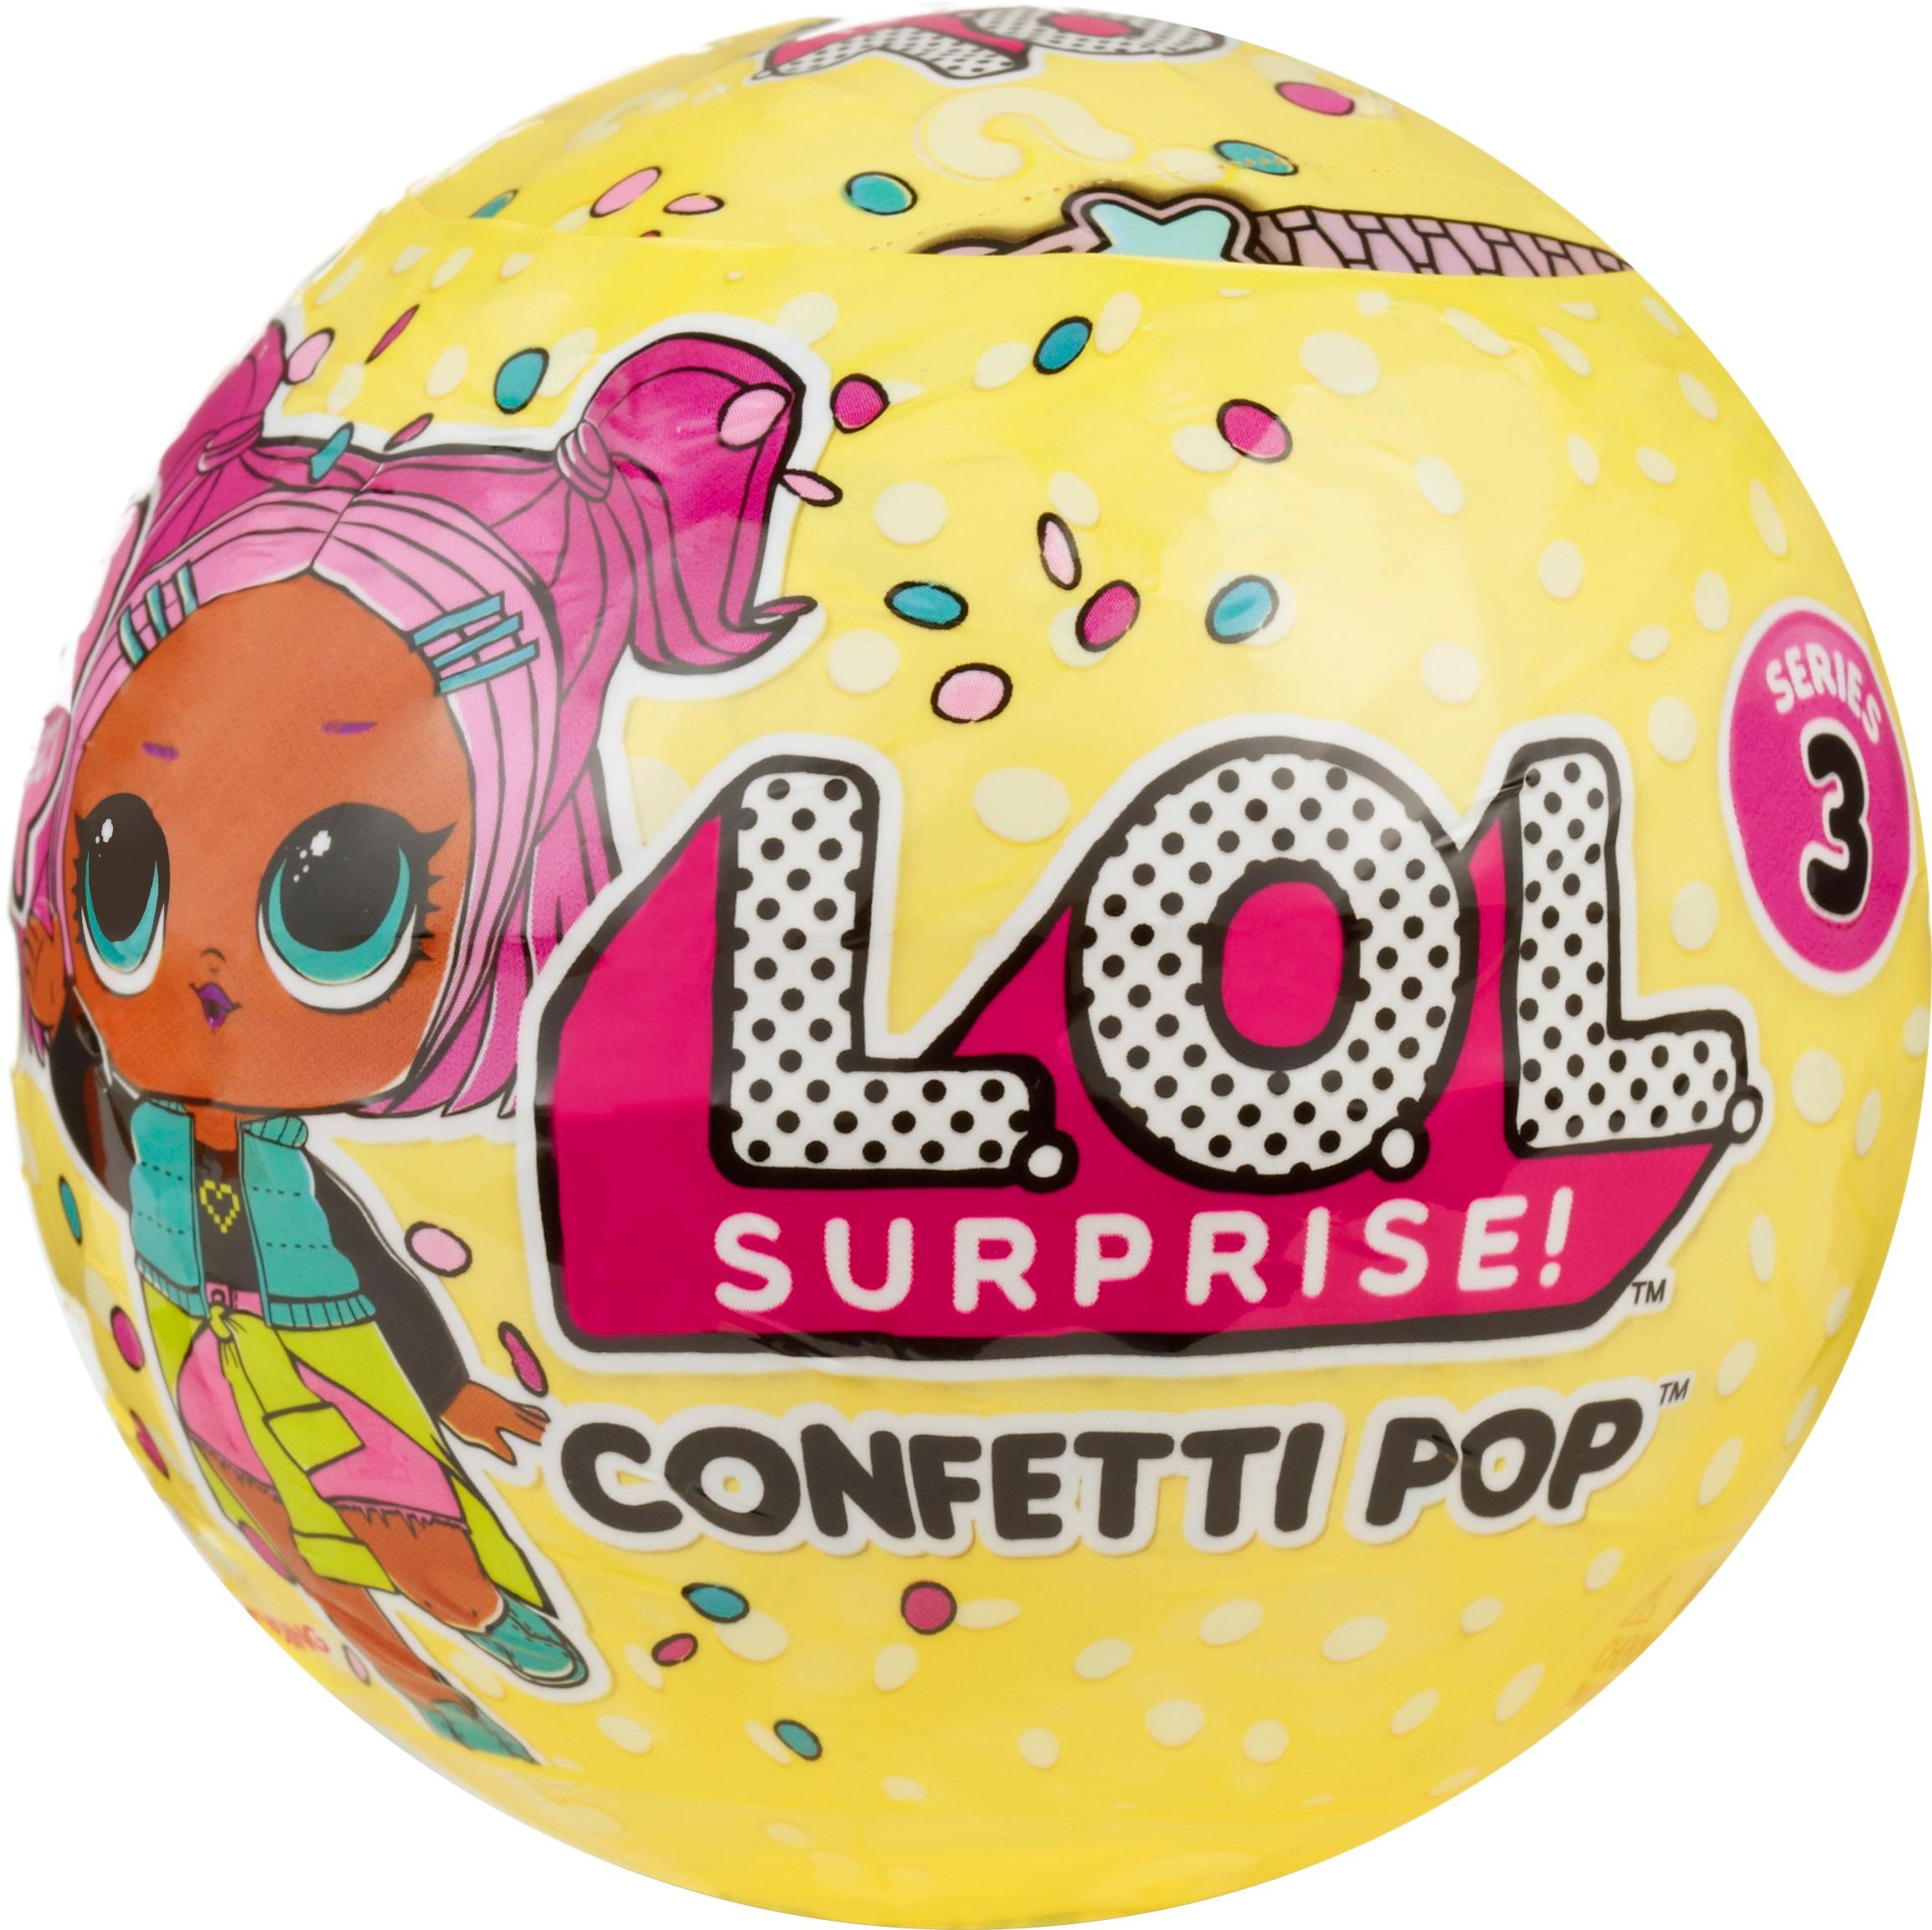 lol surprise confetti pop dolls